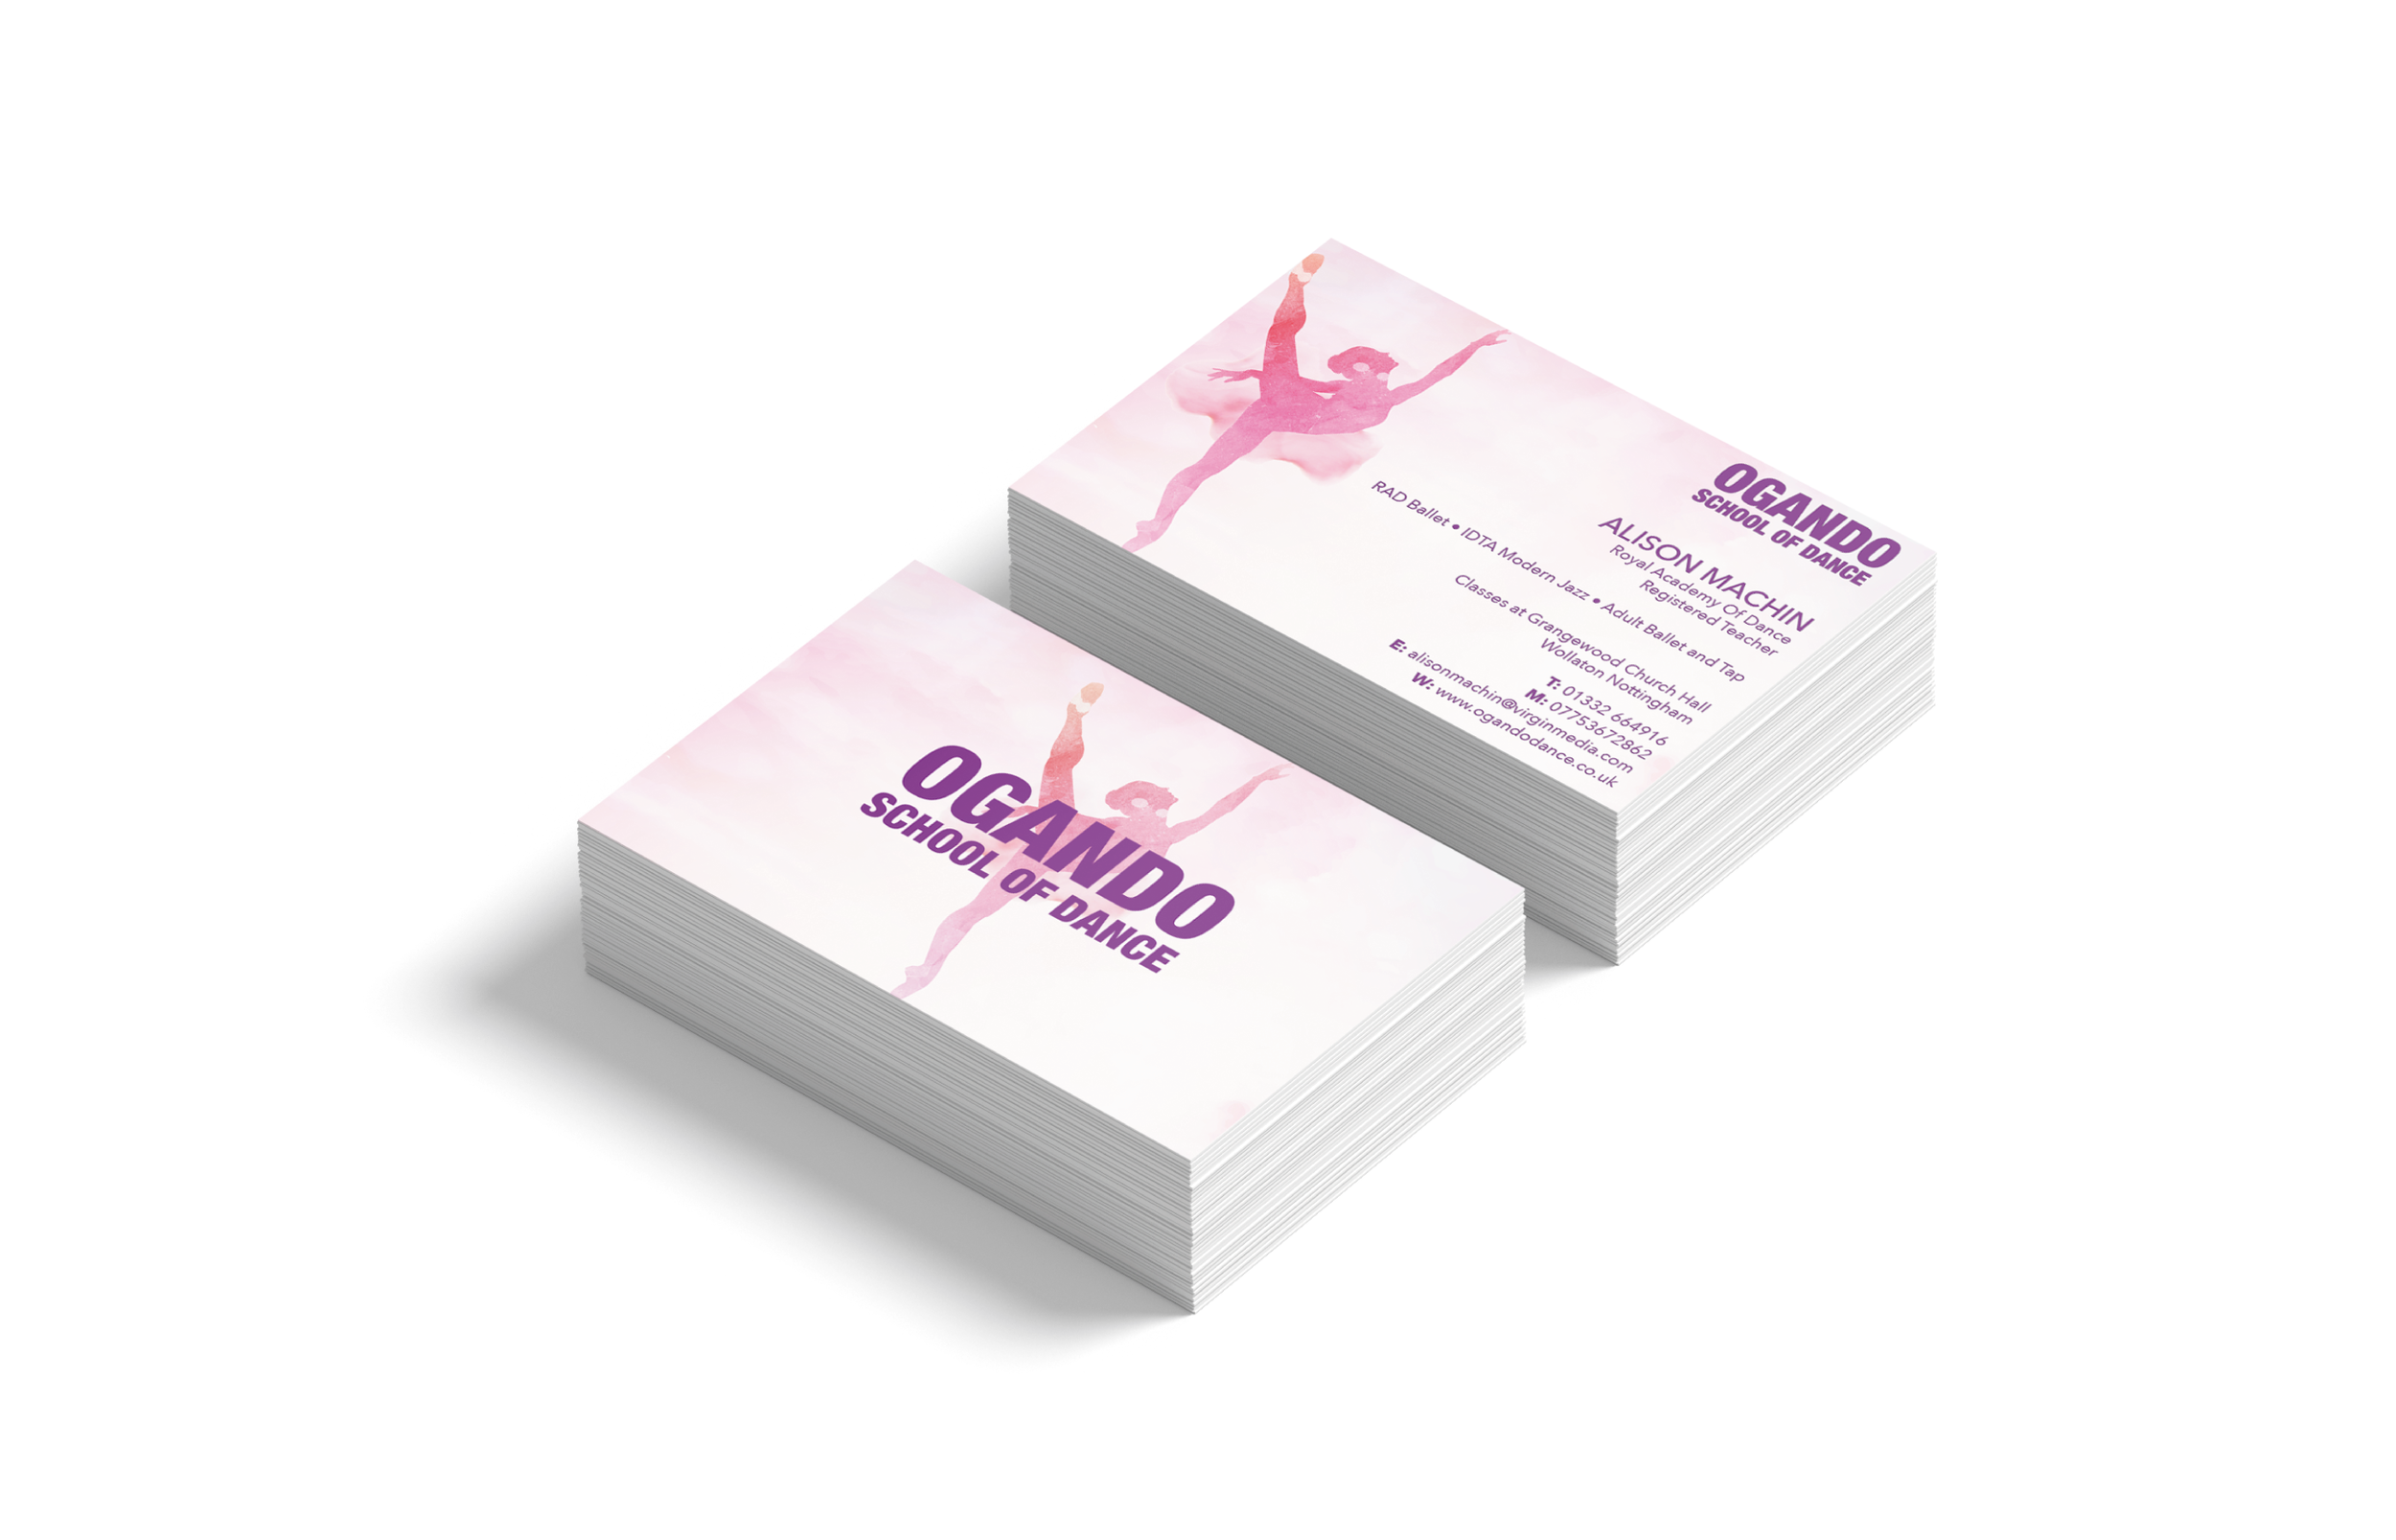 Ogando Dance School Business Cards Designed and Printed (Copy)